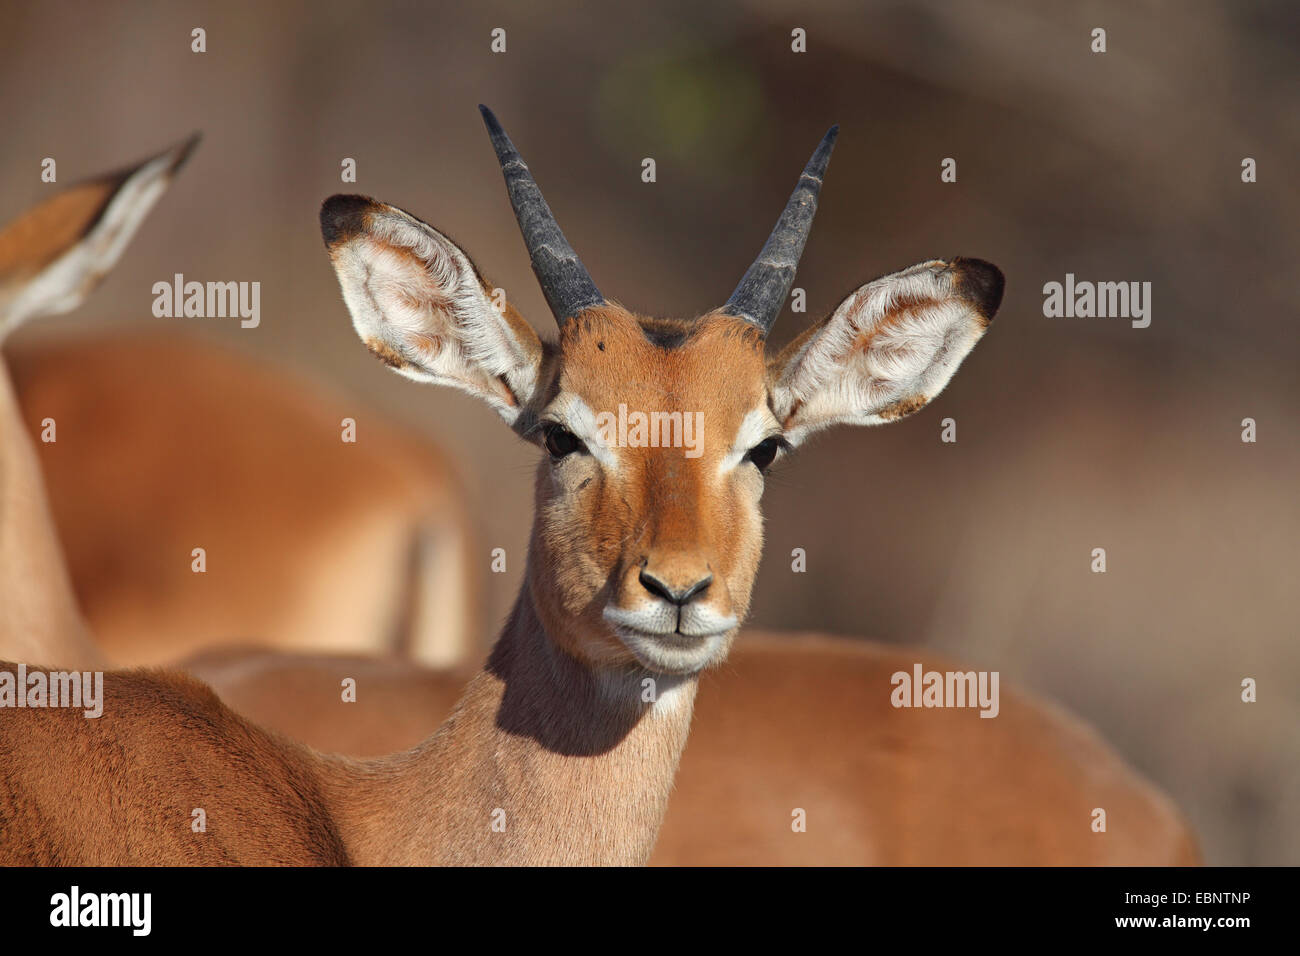 impala (Aepyceros melampus), young male, portrait, South Africa, Kruger National Park Stock Photo